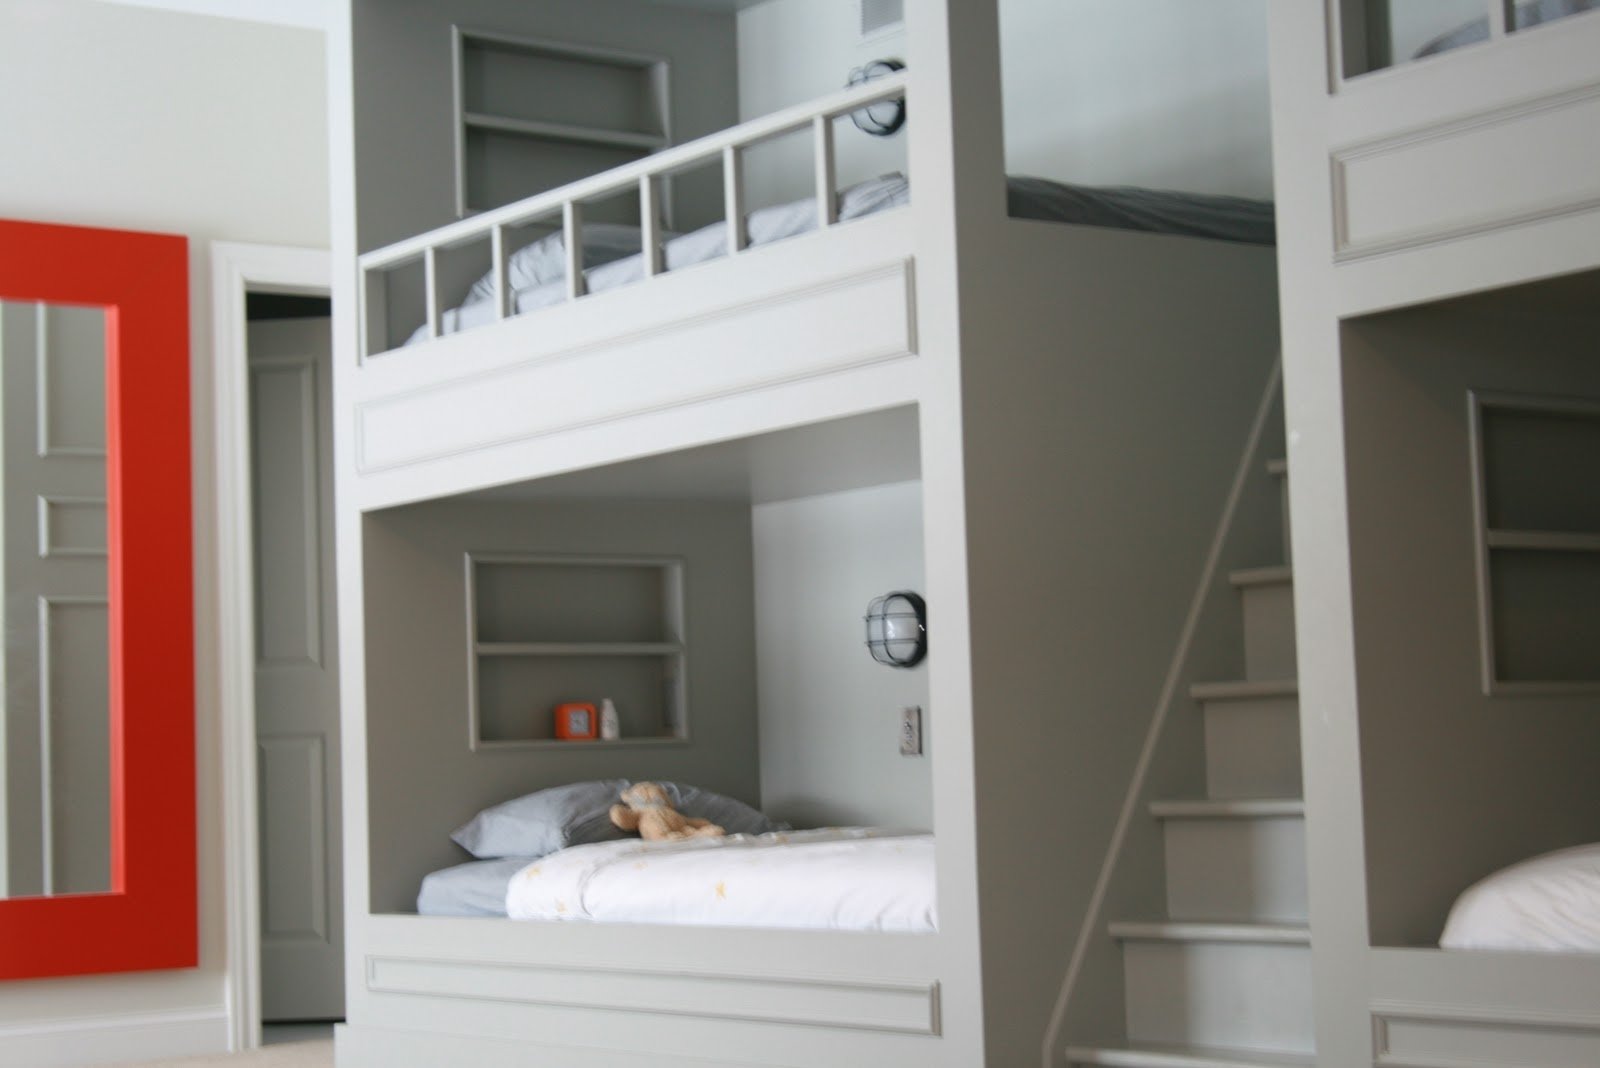 10 Elegant Built In Bunk Bed Ideas built bunk beds plans bed diy blueprints tierra este 48302 2022